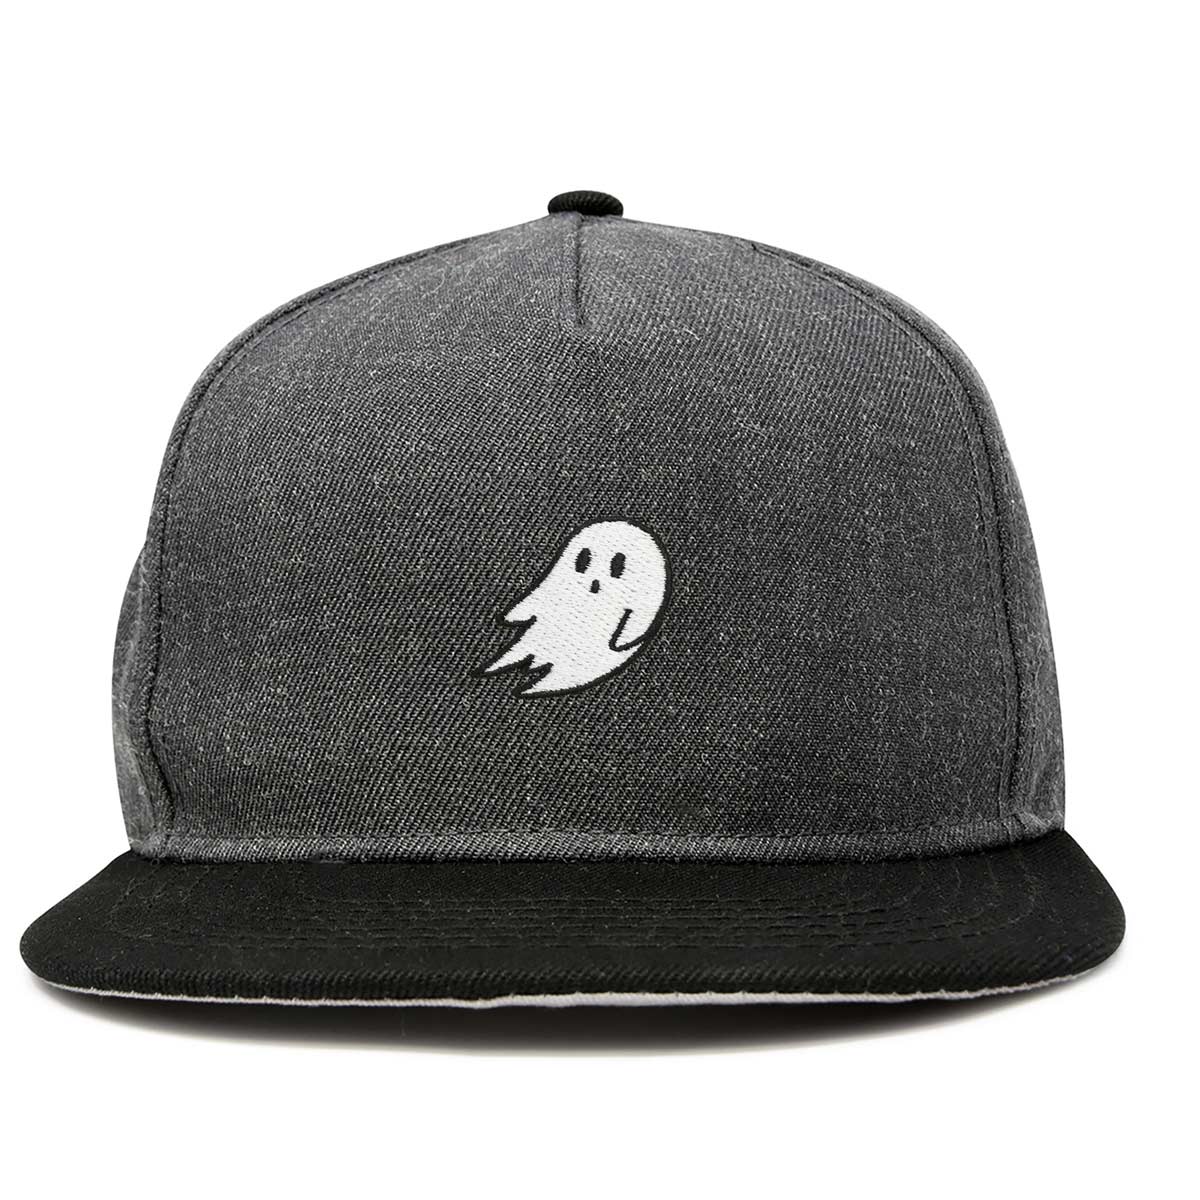 Dalix Ghost Snapback Flat Bill Baseball Hat Embroidered Cap Mens in Black